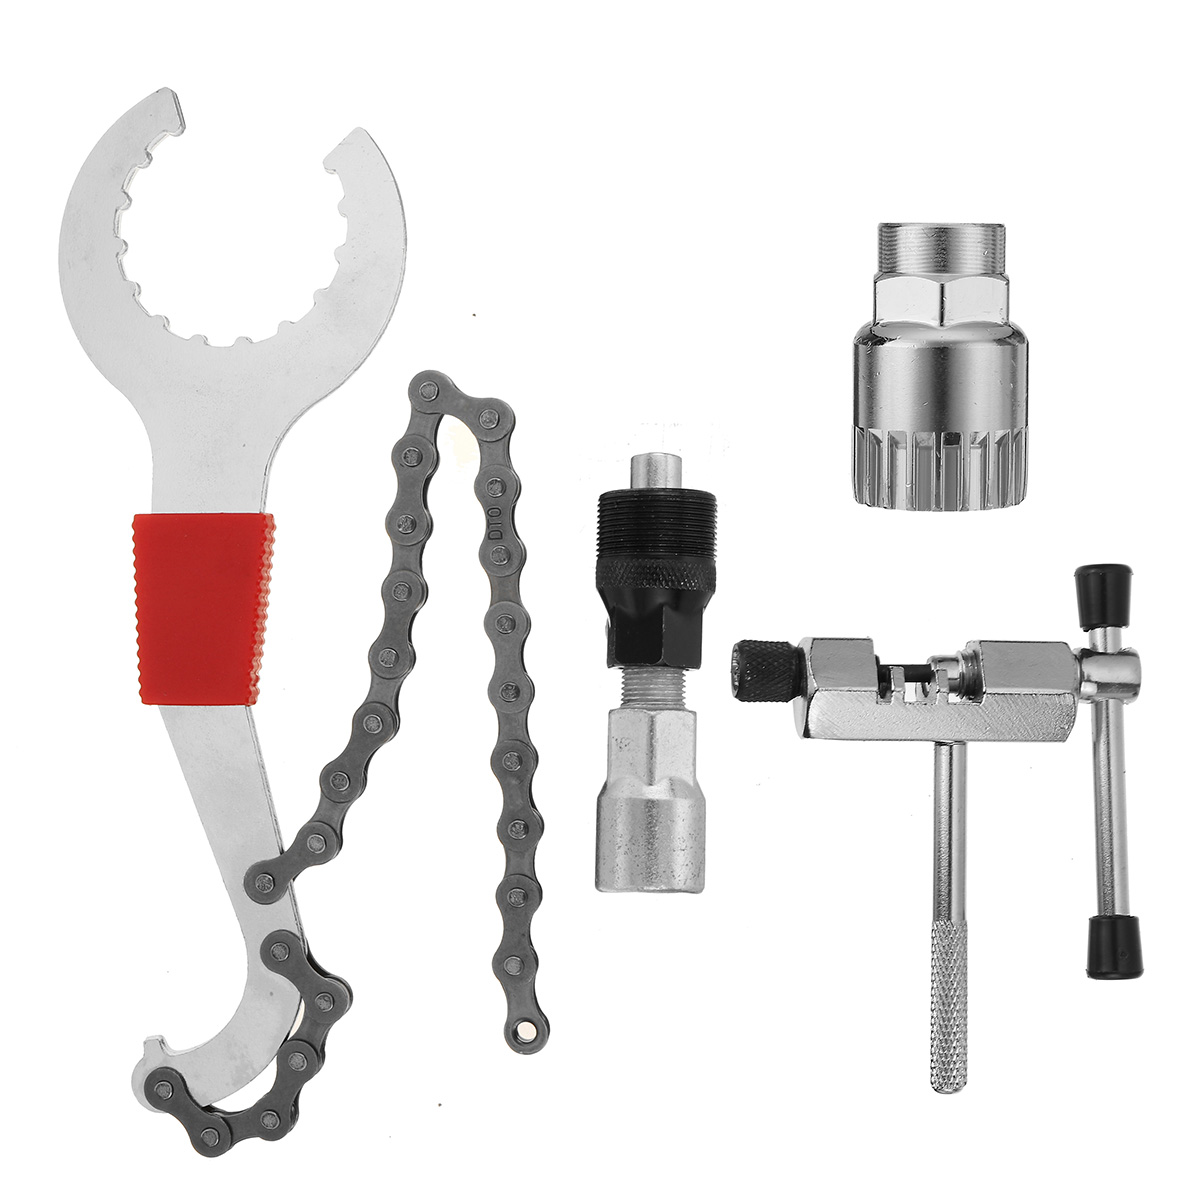 24SHOPZ BIKIGHT Mountain Bicycle Repair Tool Kits Bike Axis Tool/Chain Cutter/Chain Tool/Rama Tool/Flywheel Tool Outdoor Bike Tools